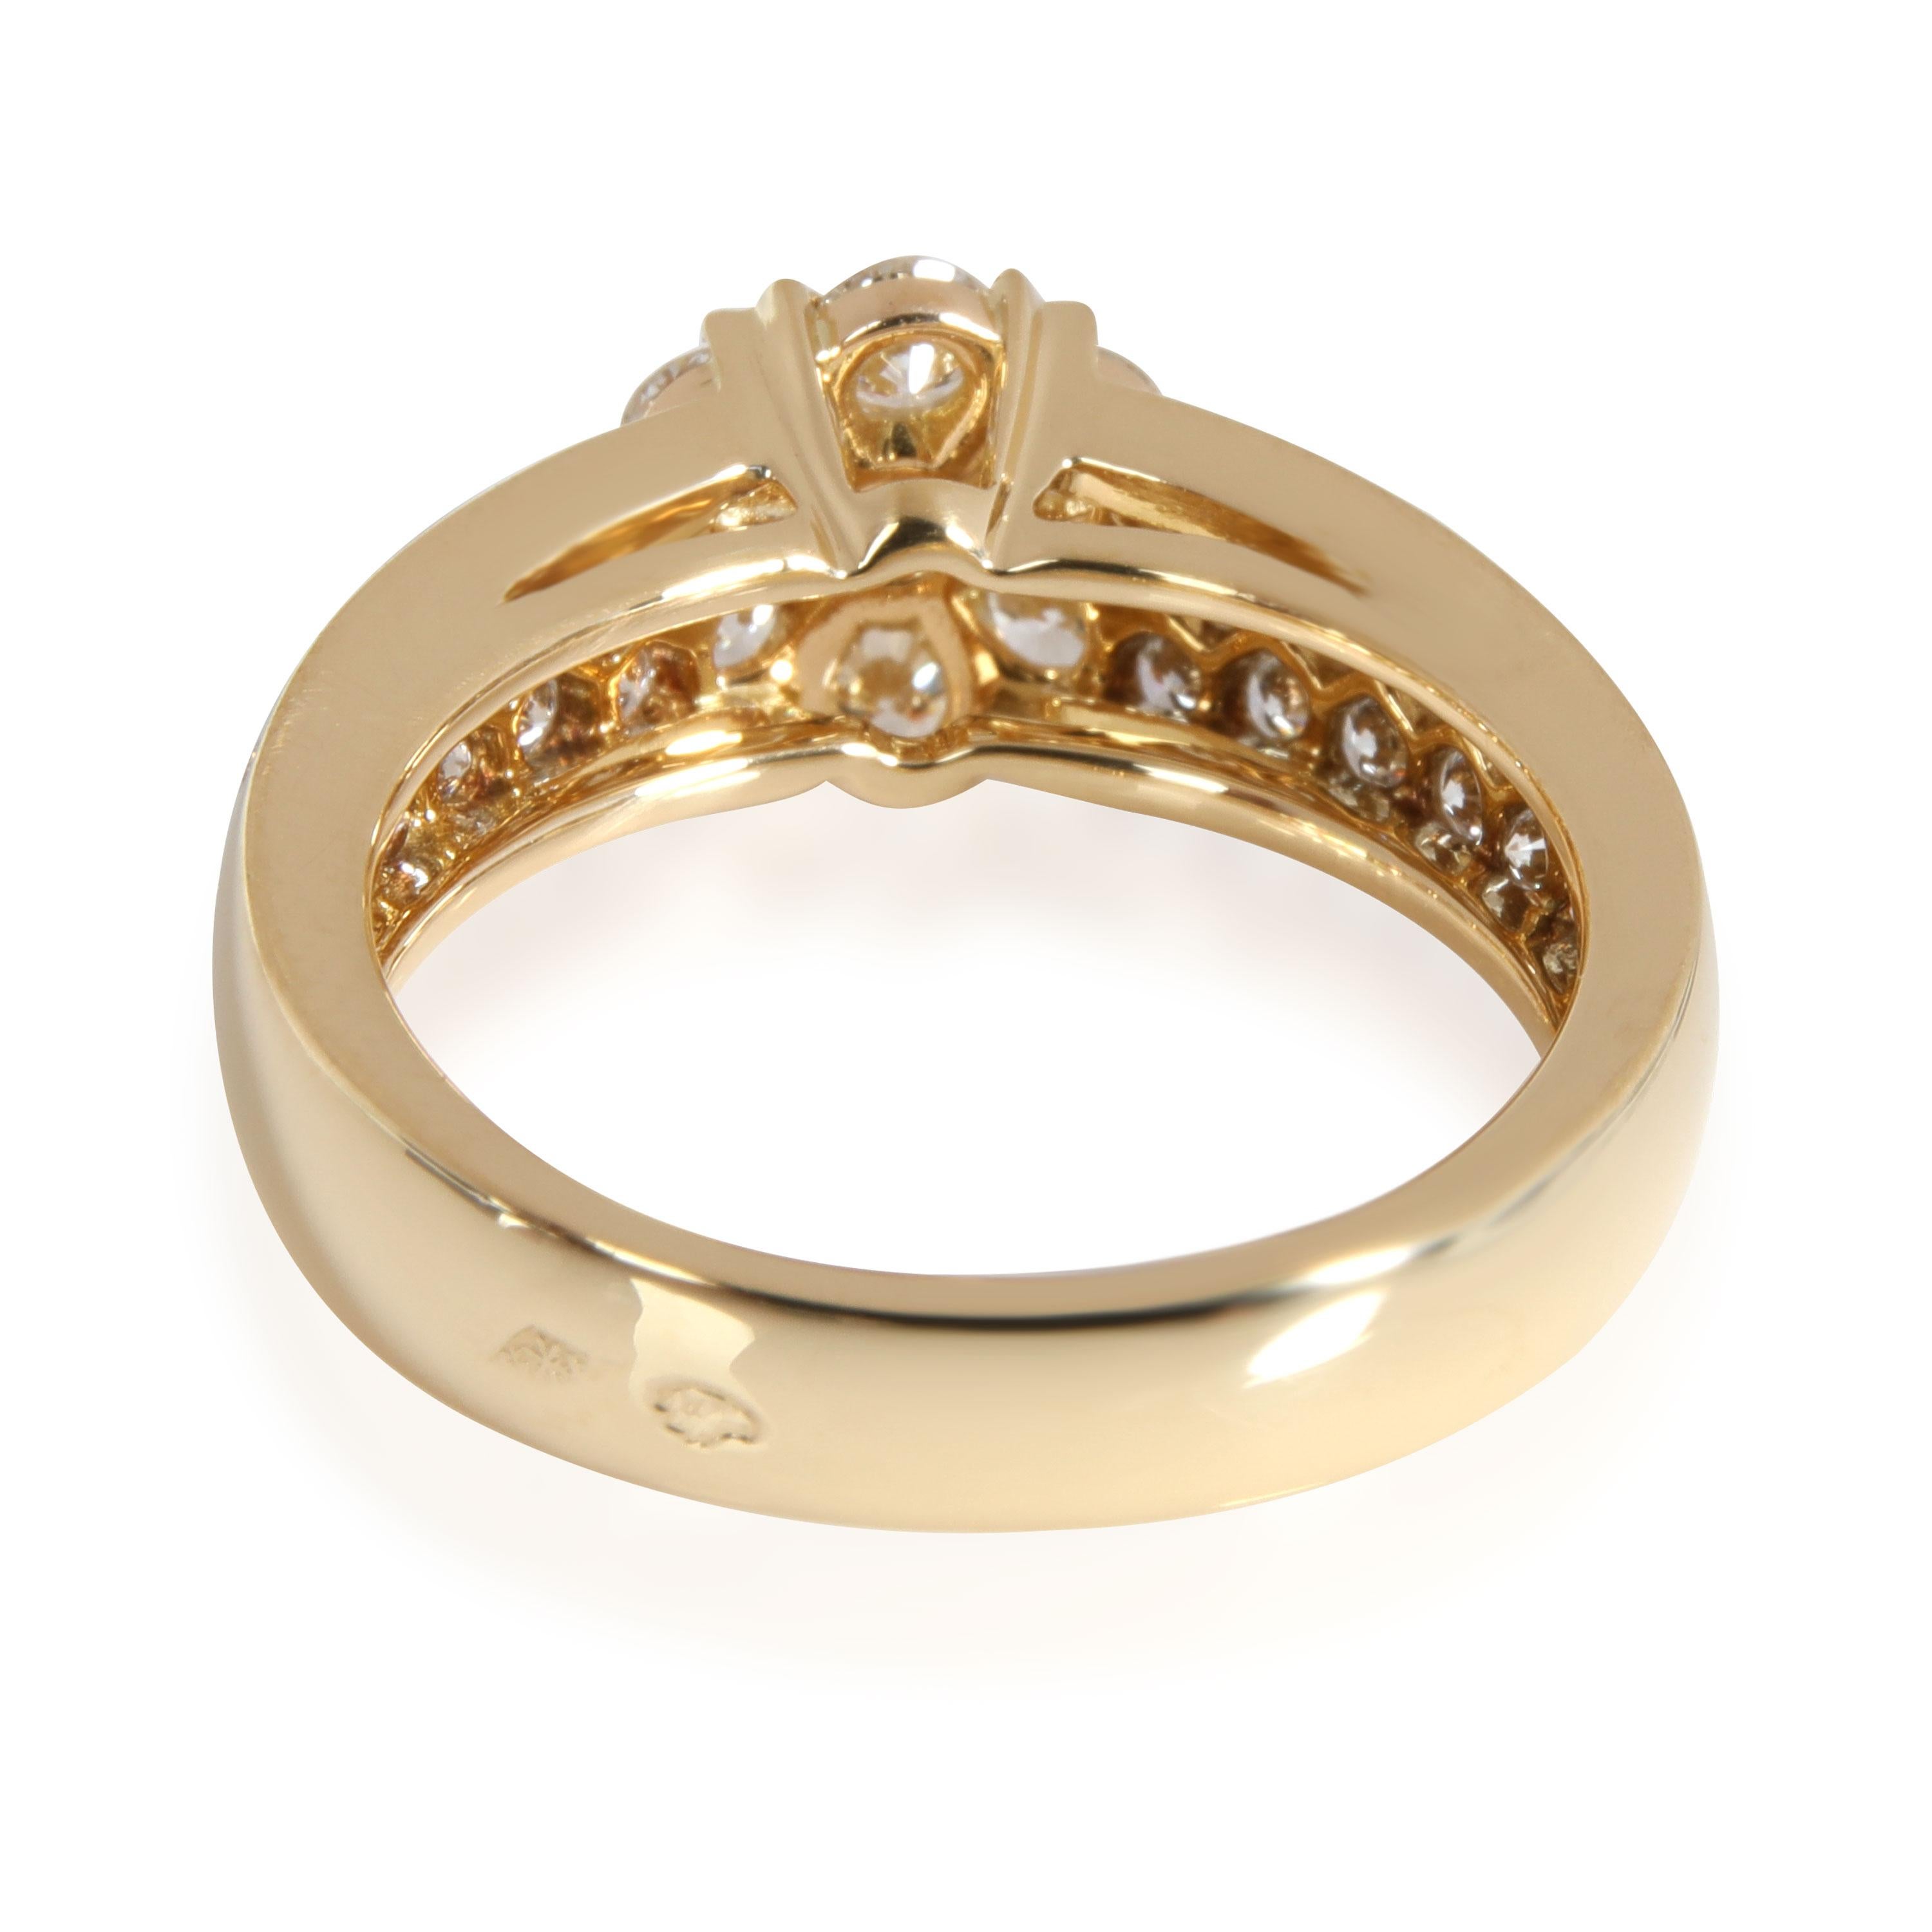 Van Cleef & Arpels Fleurette Diamond Ring in 18K Yellow Gold 1.15 CTW

PRIMARY DETAILS
SKU: 112562
Listing Title: Van Cleef & Arpels Fleurette Diamond Ring in 18K Yellow Gold 1.15 CTW
Condition Description: Retails for 18,000 USD. In excellent